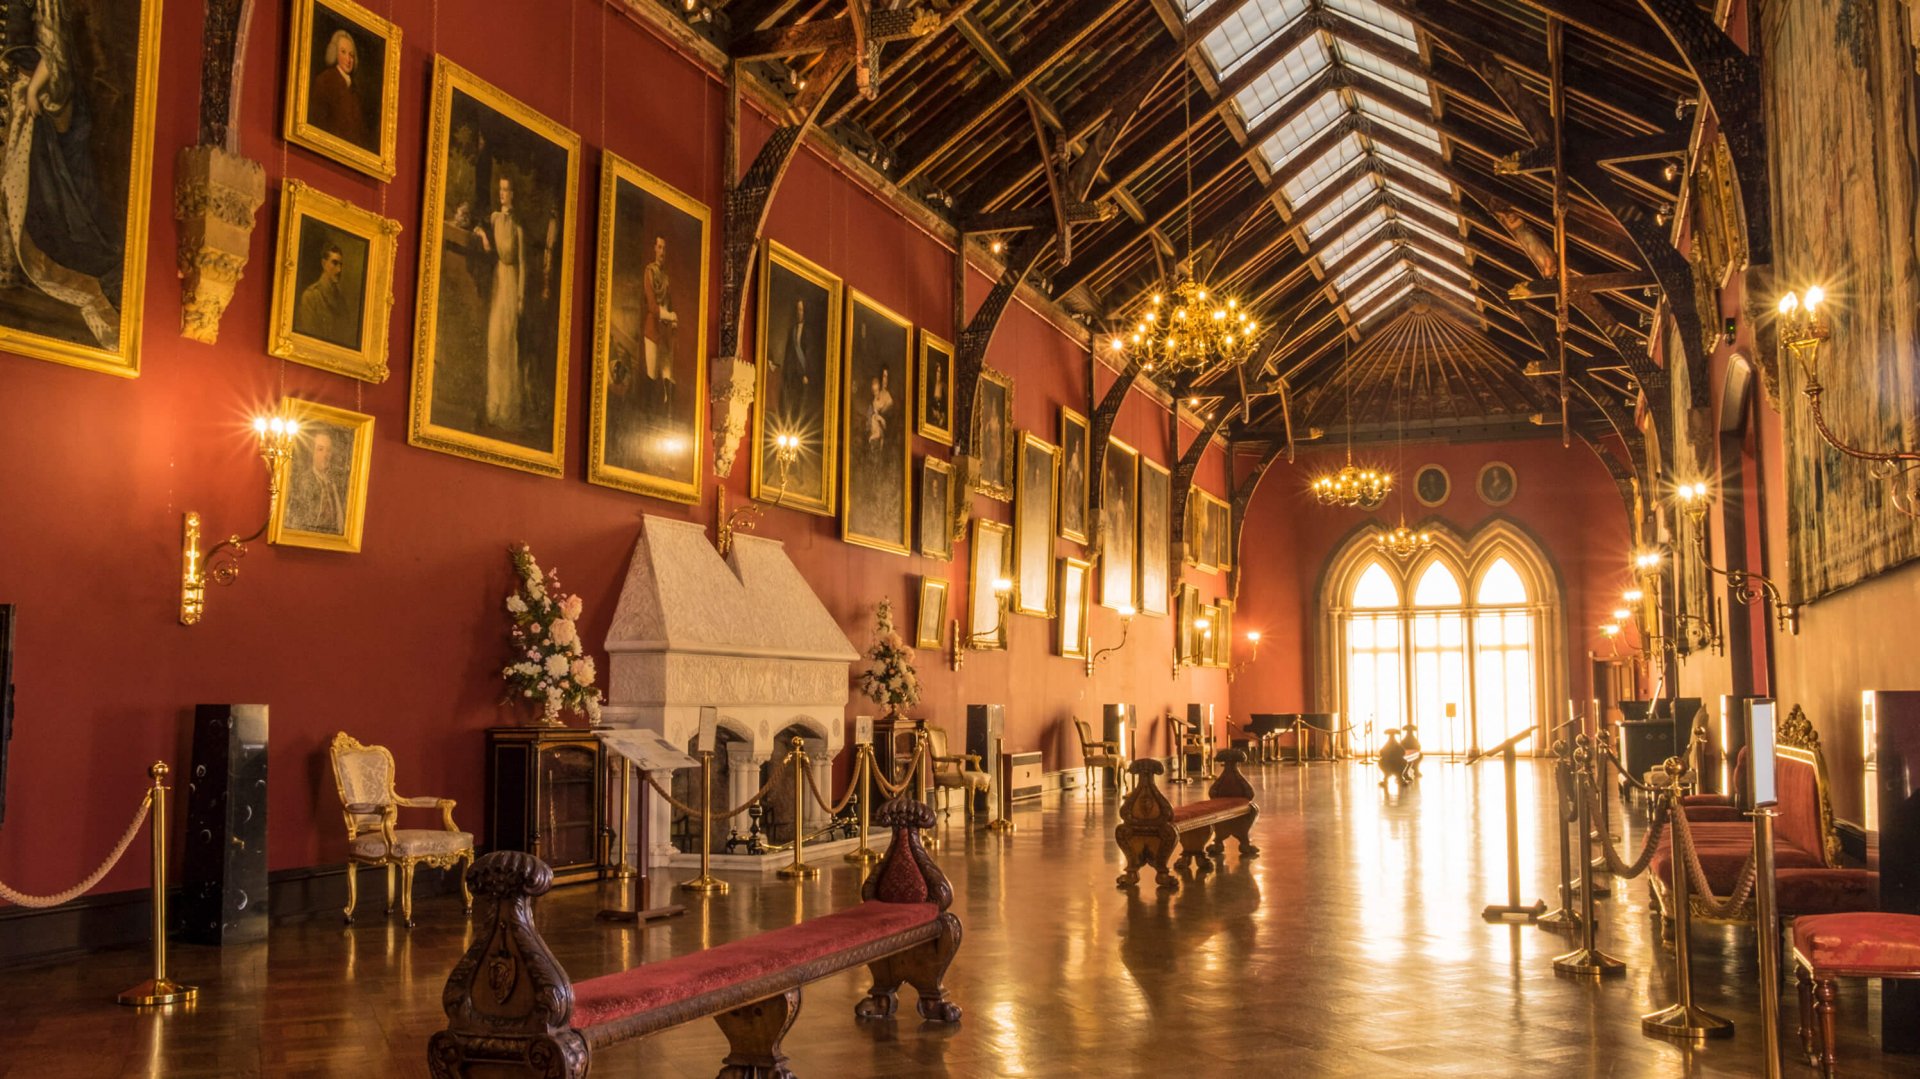 Entrance Hall of Kilkenny Castle in Ireland